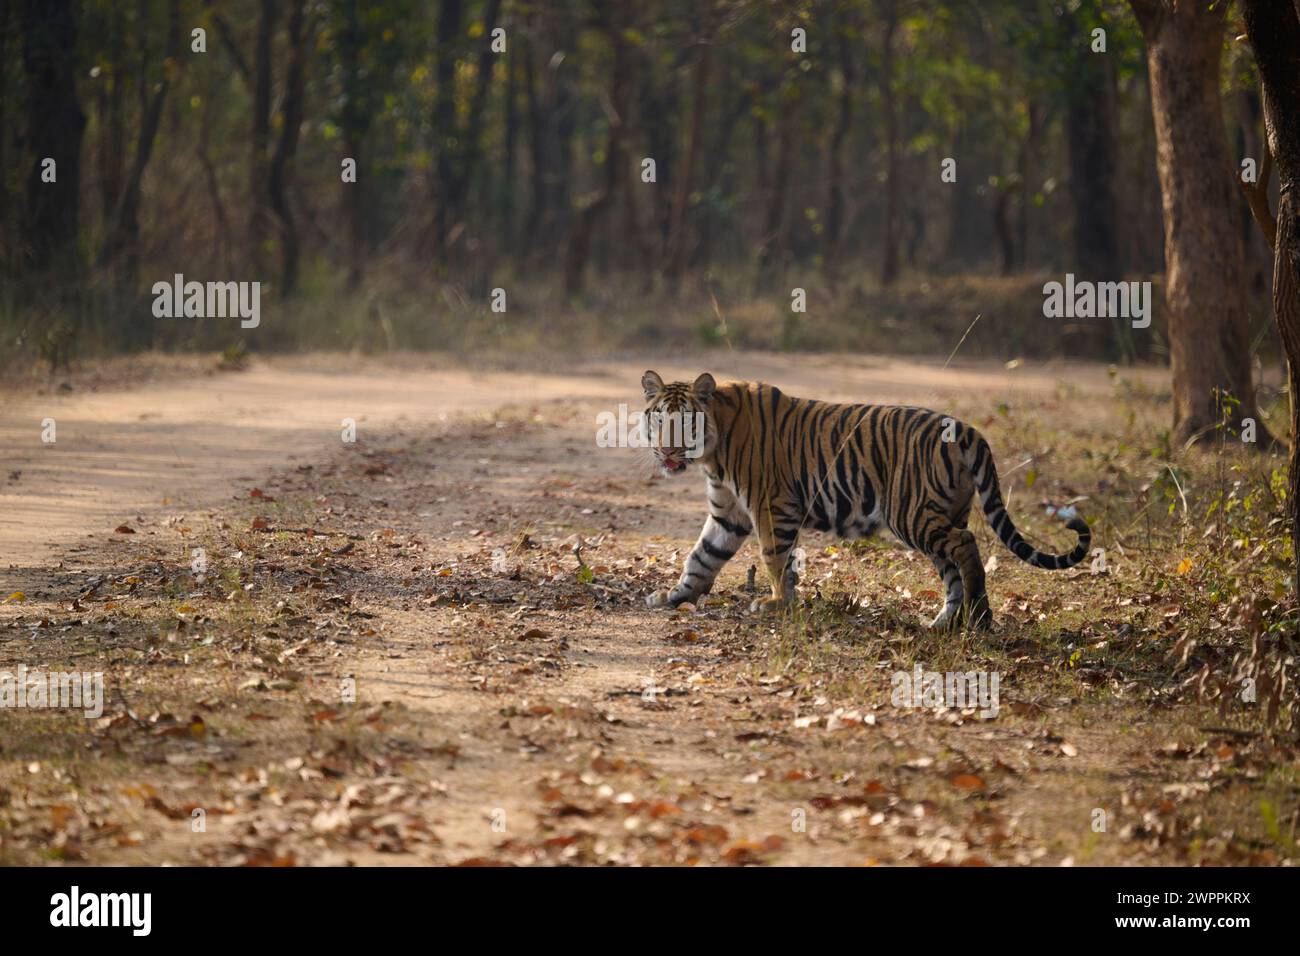 Subadult Tiger Crossing Road, Bandhavgarh Stock Photo